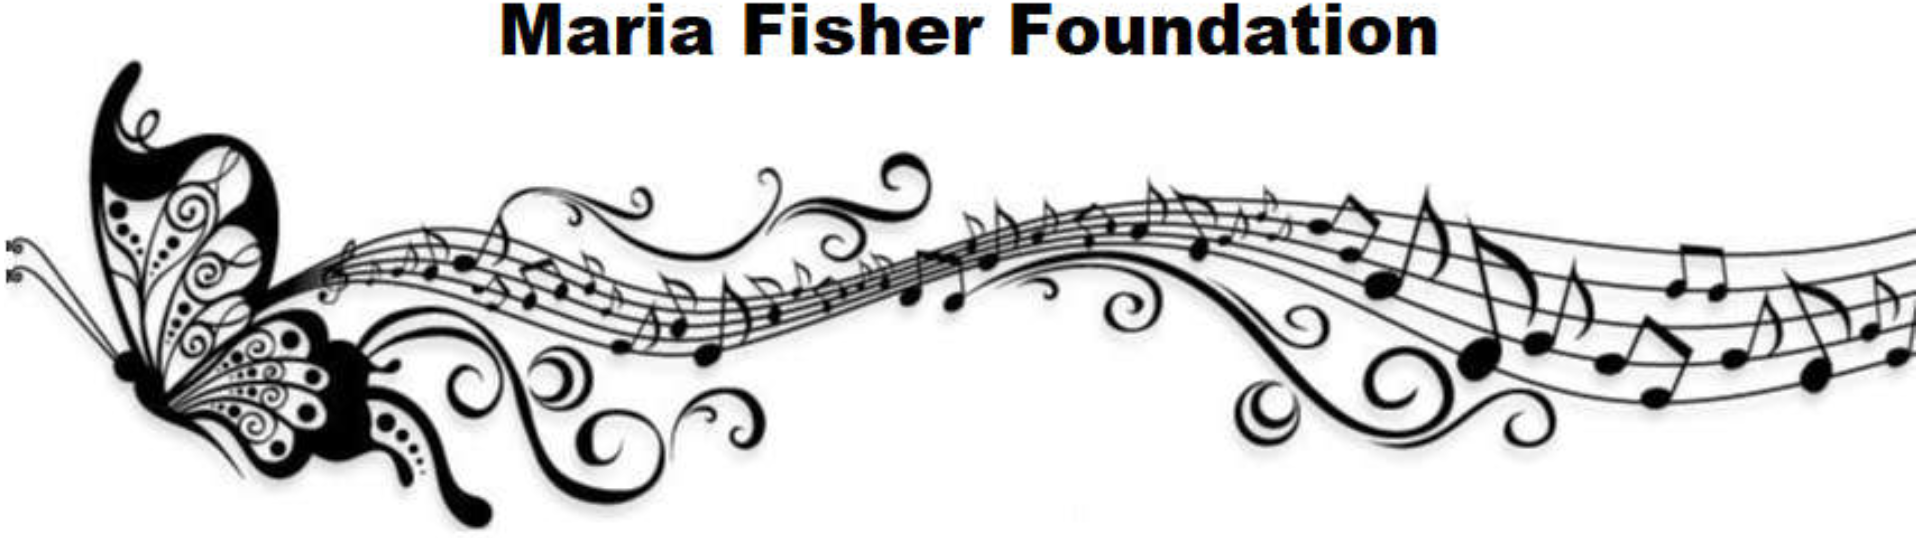 Maria Fisher Foundation